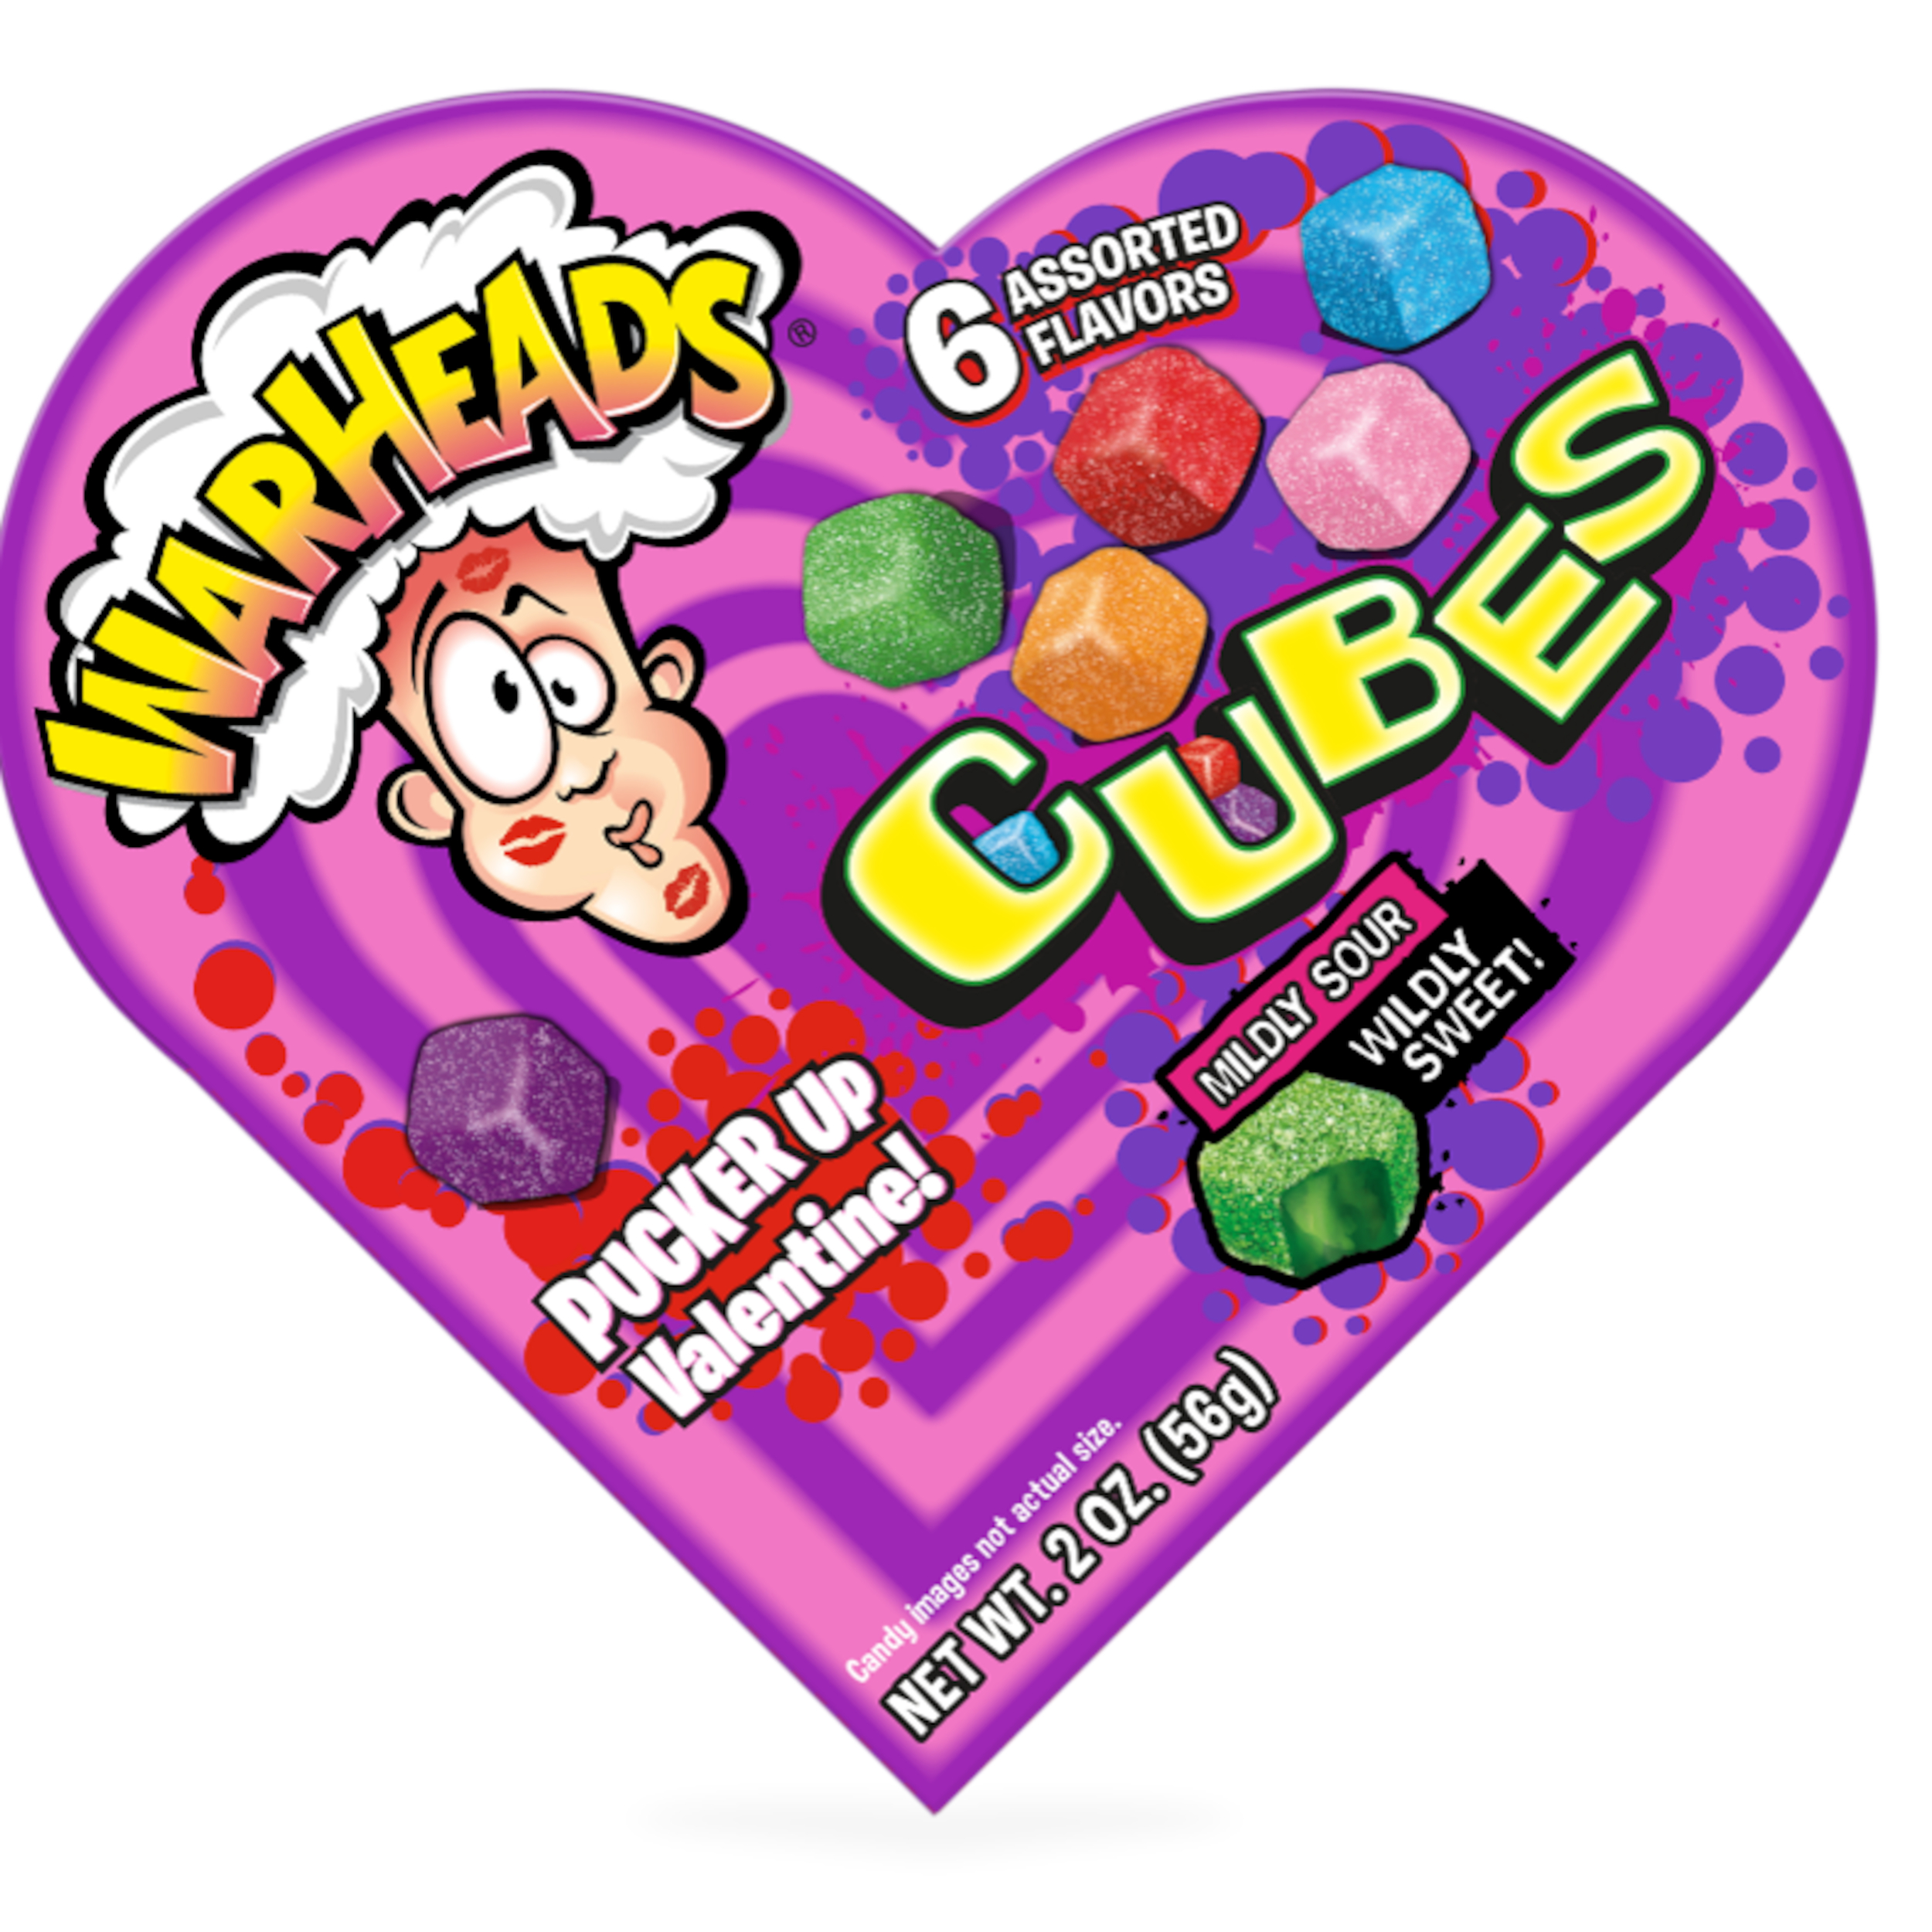 Warheads Cubes Heart Box, 2 oz. - image 1 of 5